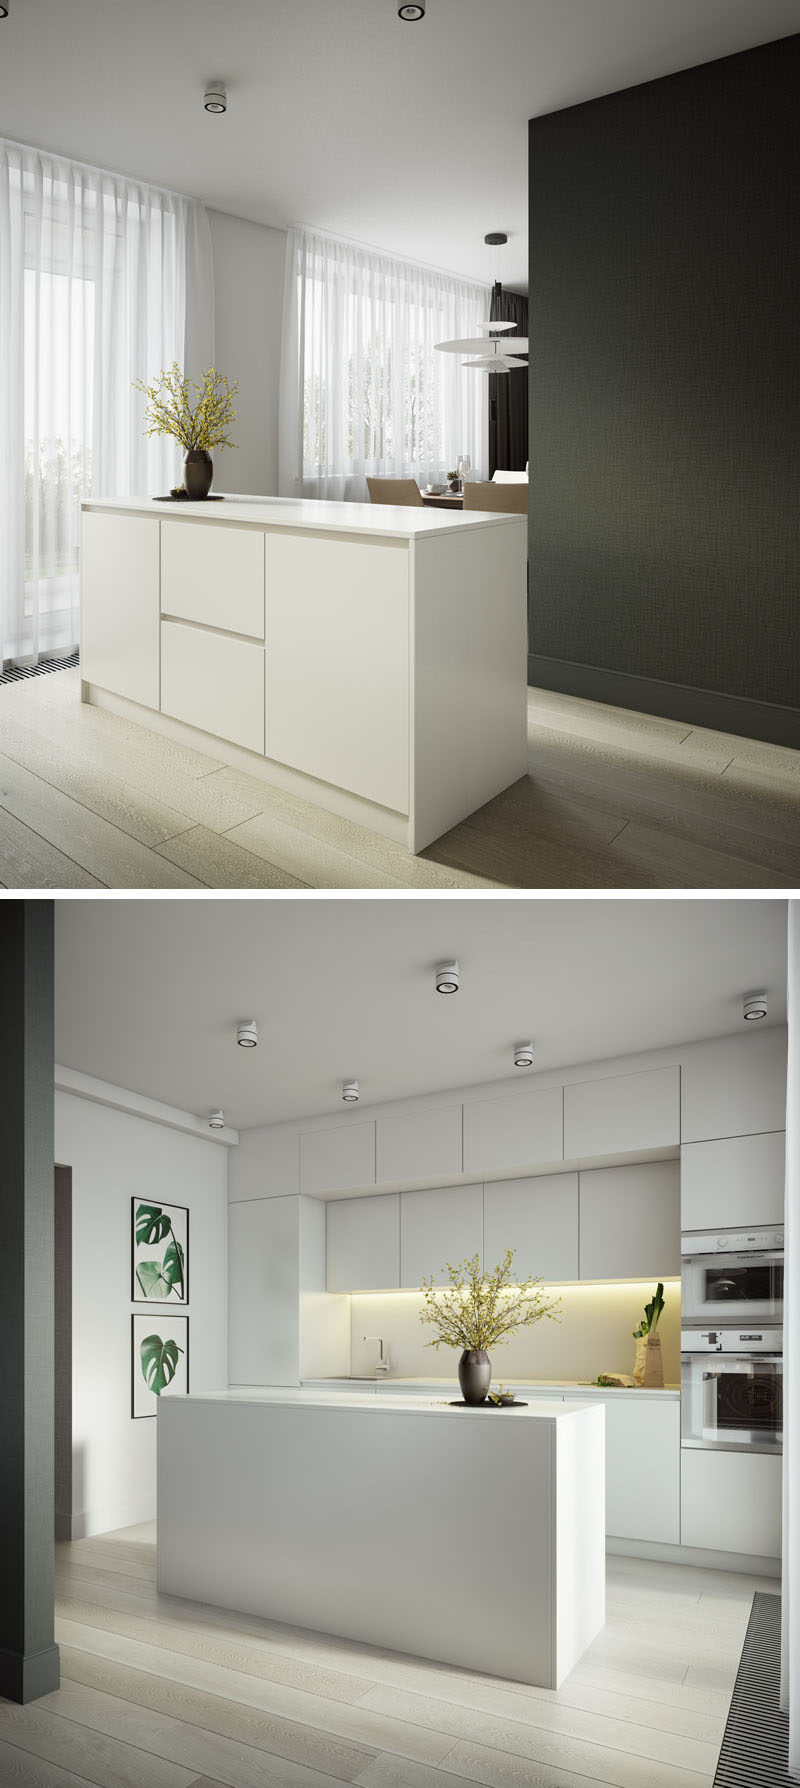 This modern apartment has a bright white kitchen with hardware-free cabinets. #ModernKitchen #WhiteKitchen